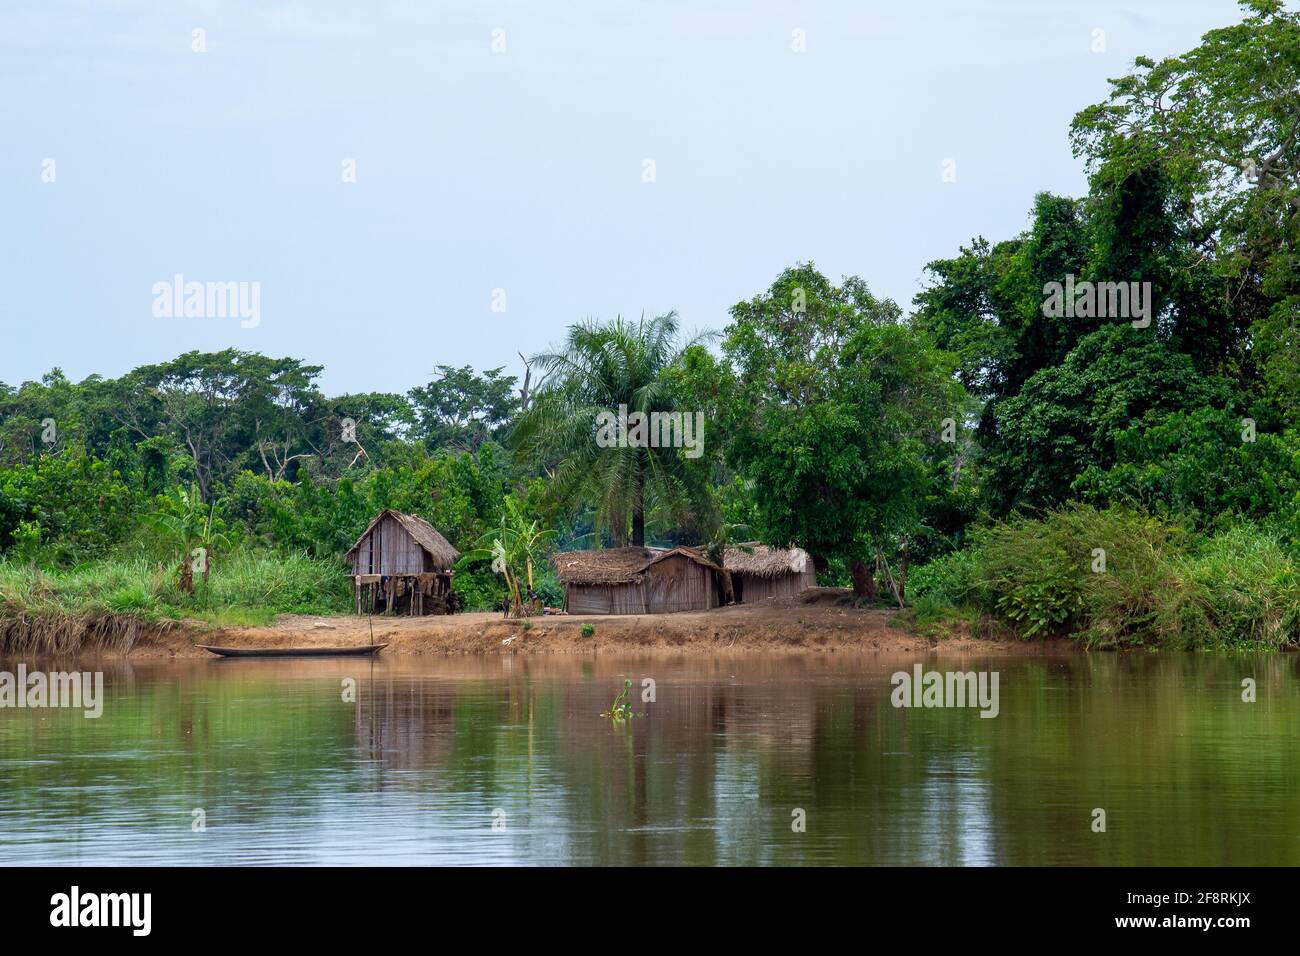 Village reflections, Congo river, Democratic Republic of Congo Stock Photo